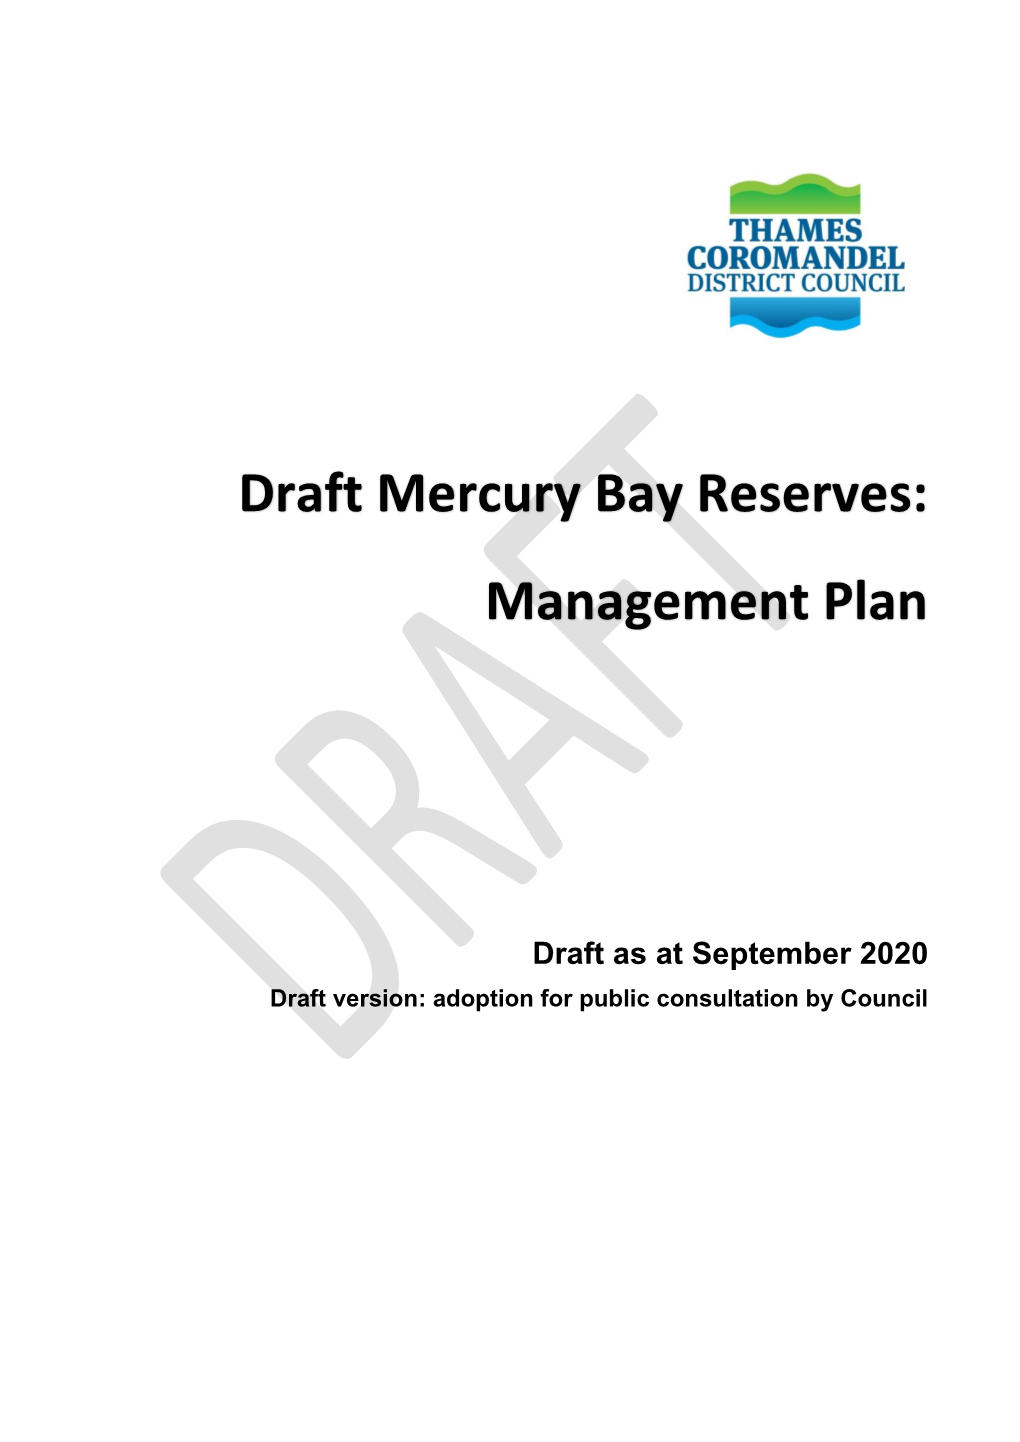 Draft Mercury Bay Reserves: Management Plan